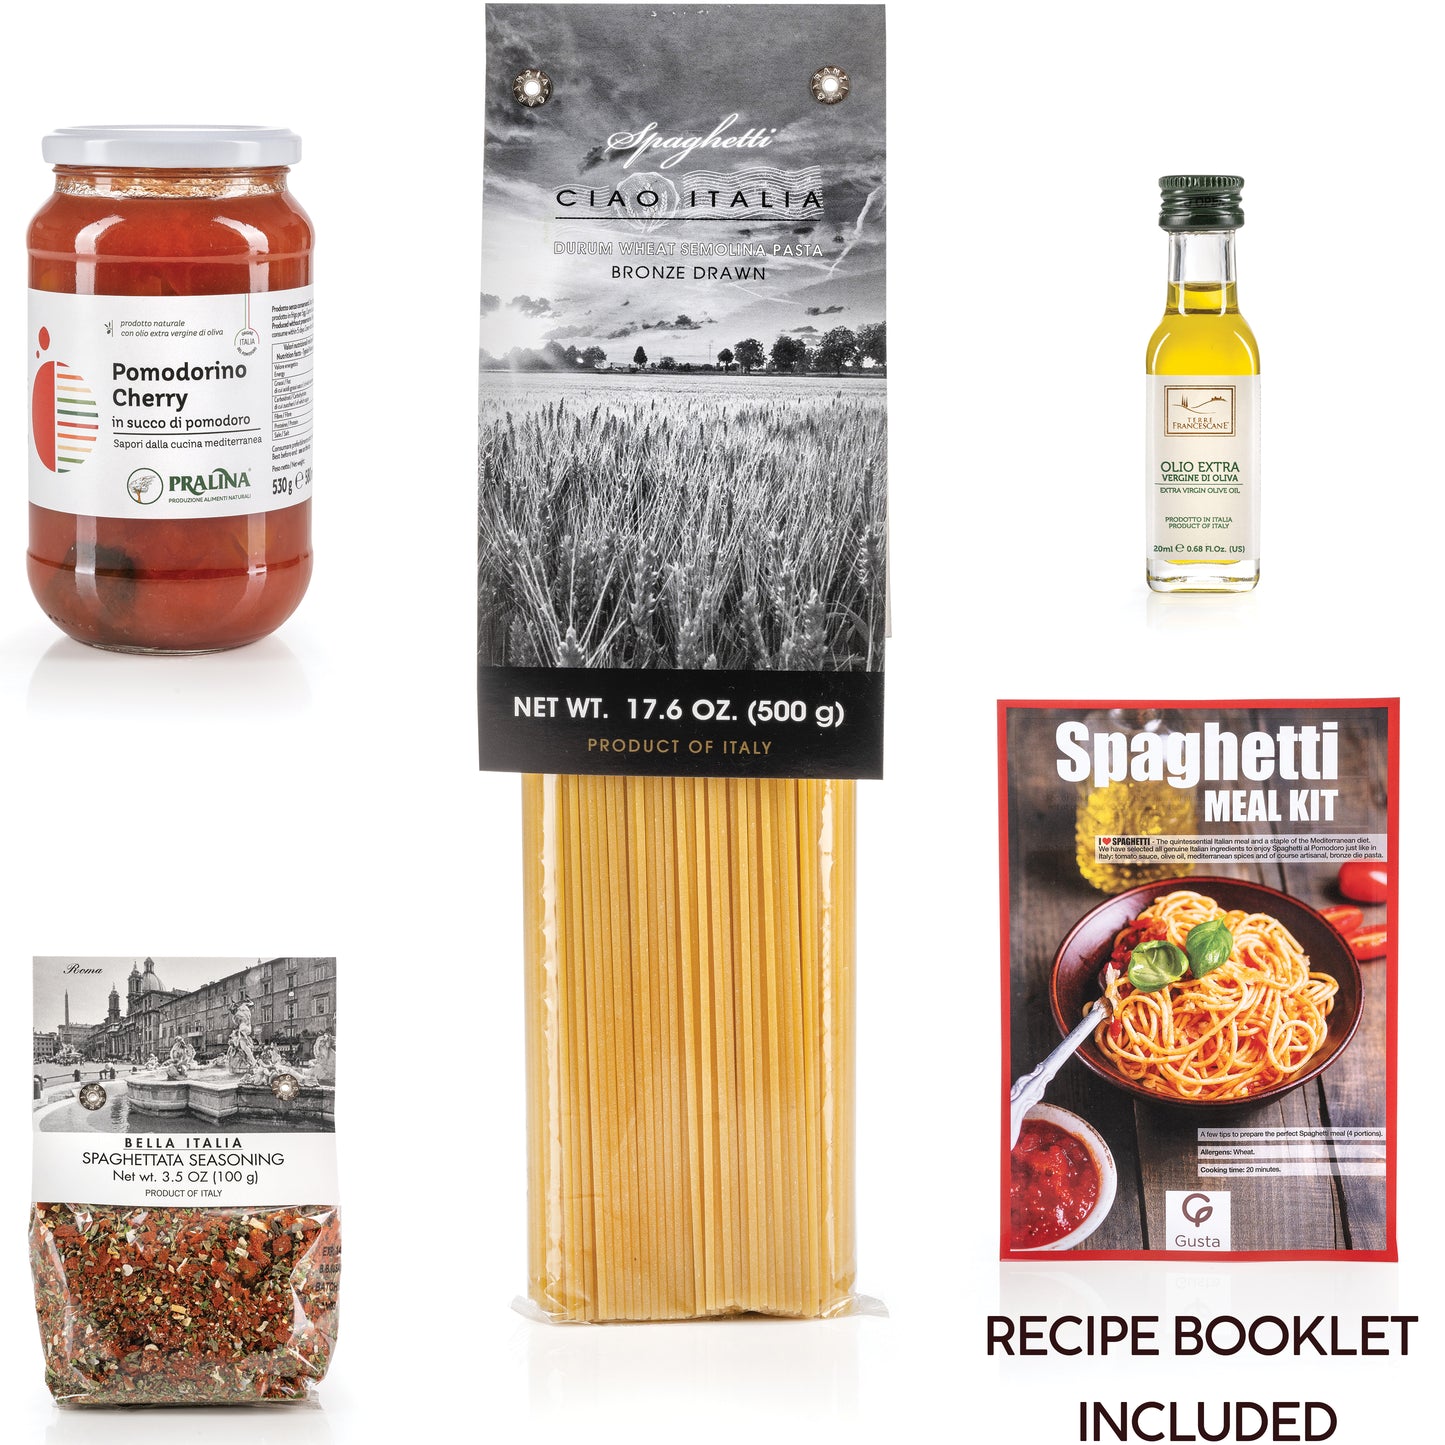 Gusta Tomato Spaghetti Pasta Meal Kit - USDA Organic - Non-GMO Durum Wheat Semolina - Makes 5 Meals